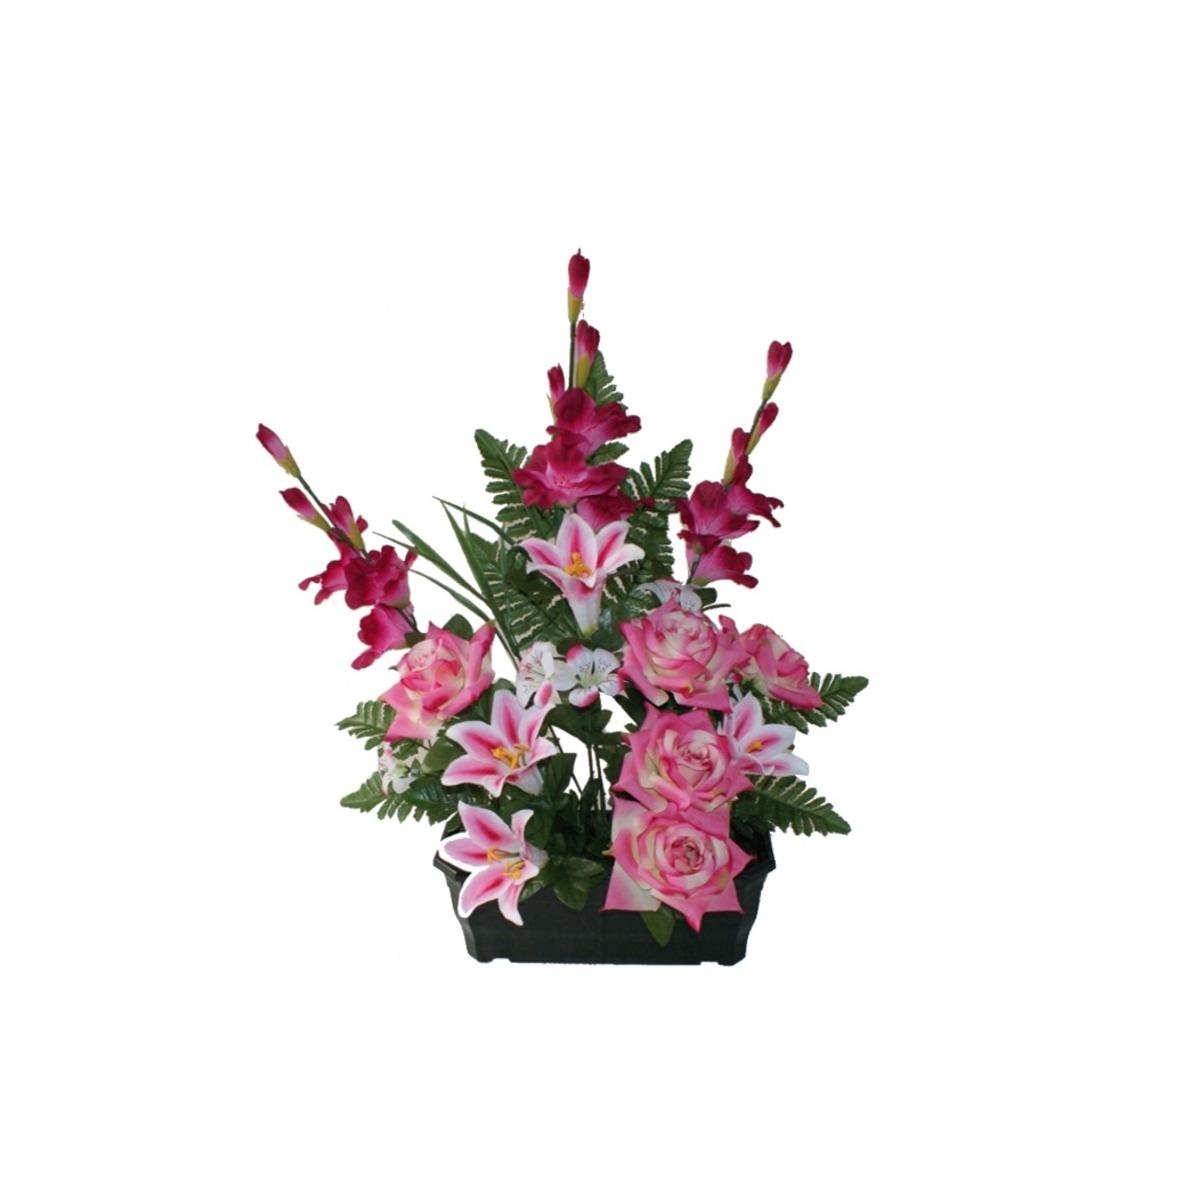 Jardinière de roses + lys + freesia - Hauteur 60 cm - Rose